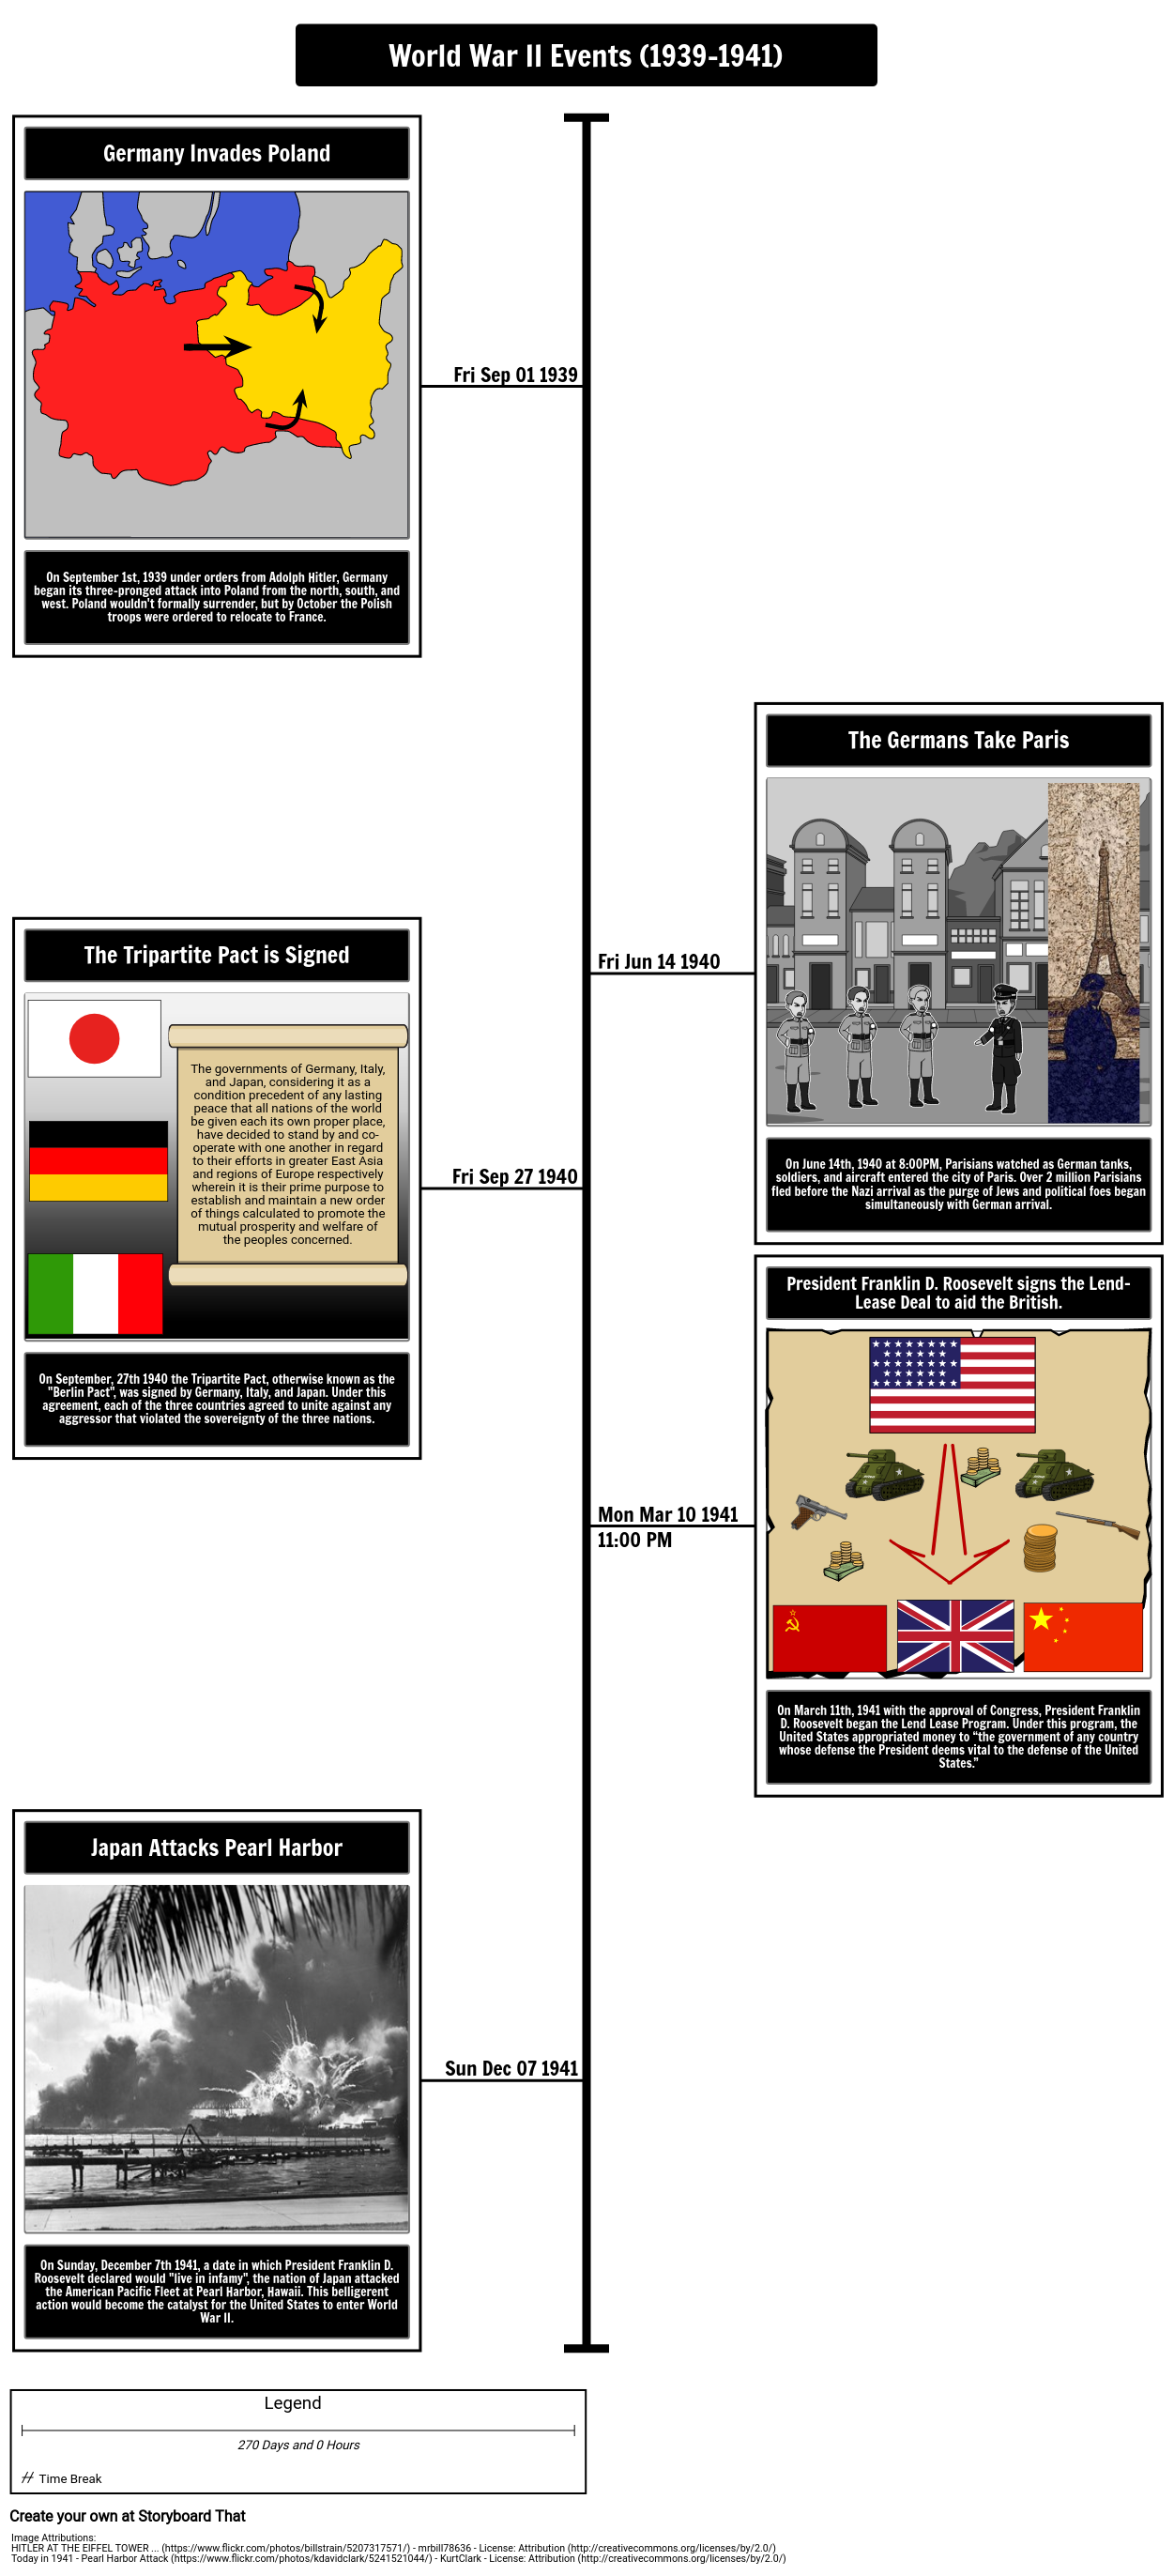 World War II (19391941) Interactive Timeline Activity